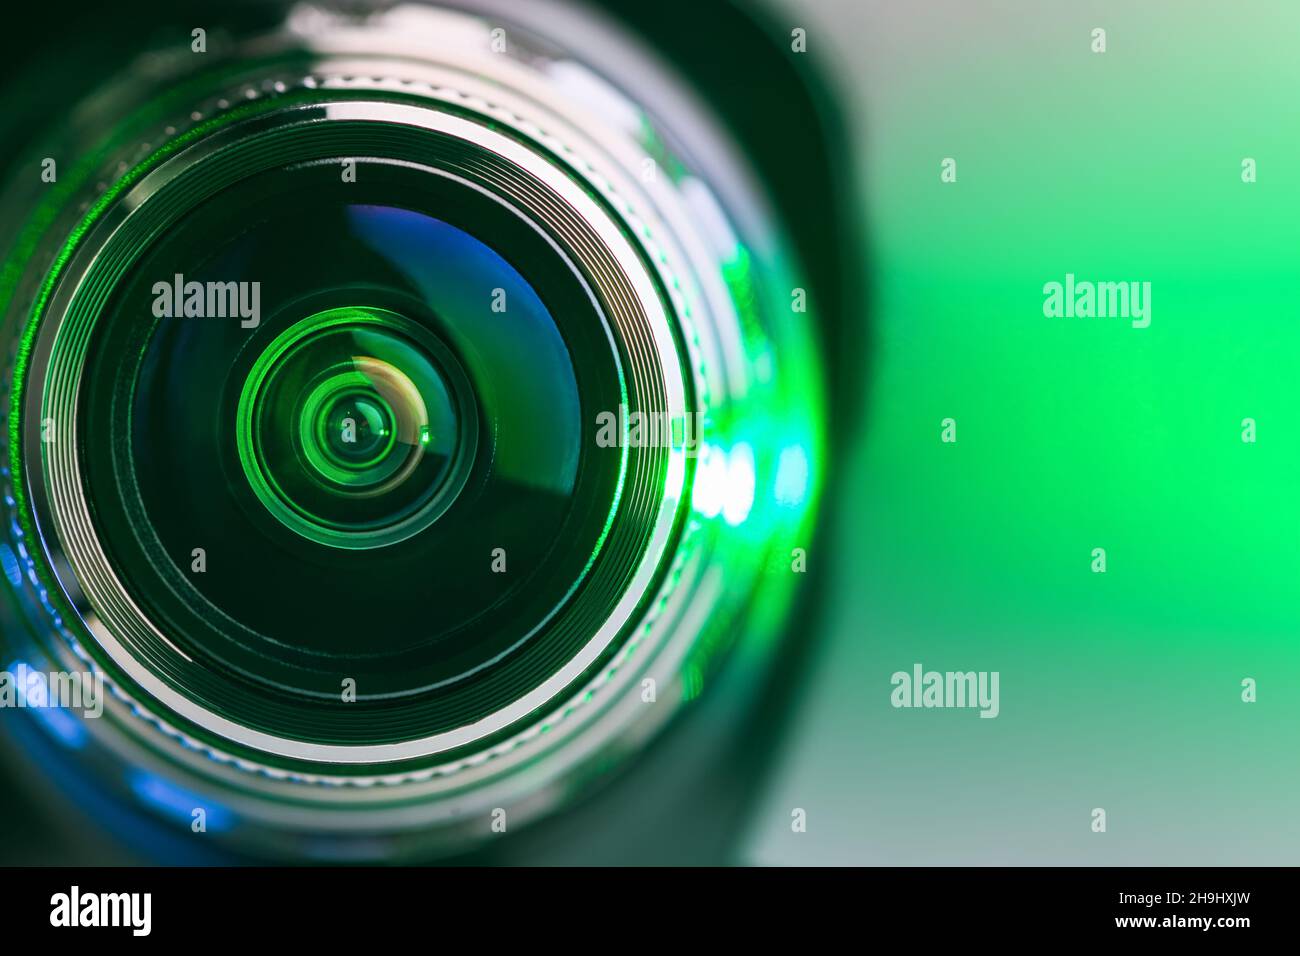 Das Kameraobjektiv und die grüne Hintergrundbeleuchtung. Grüne Kamera Nahaufnahme des Objektivs. Horizontales Foto Stockfoto